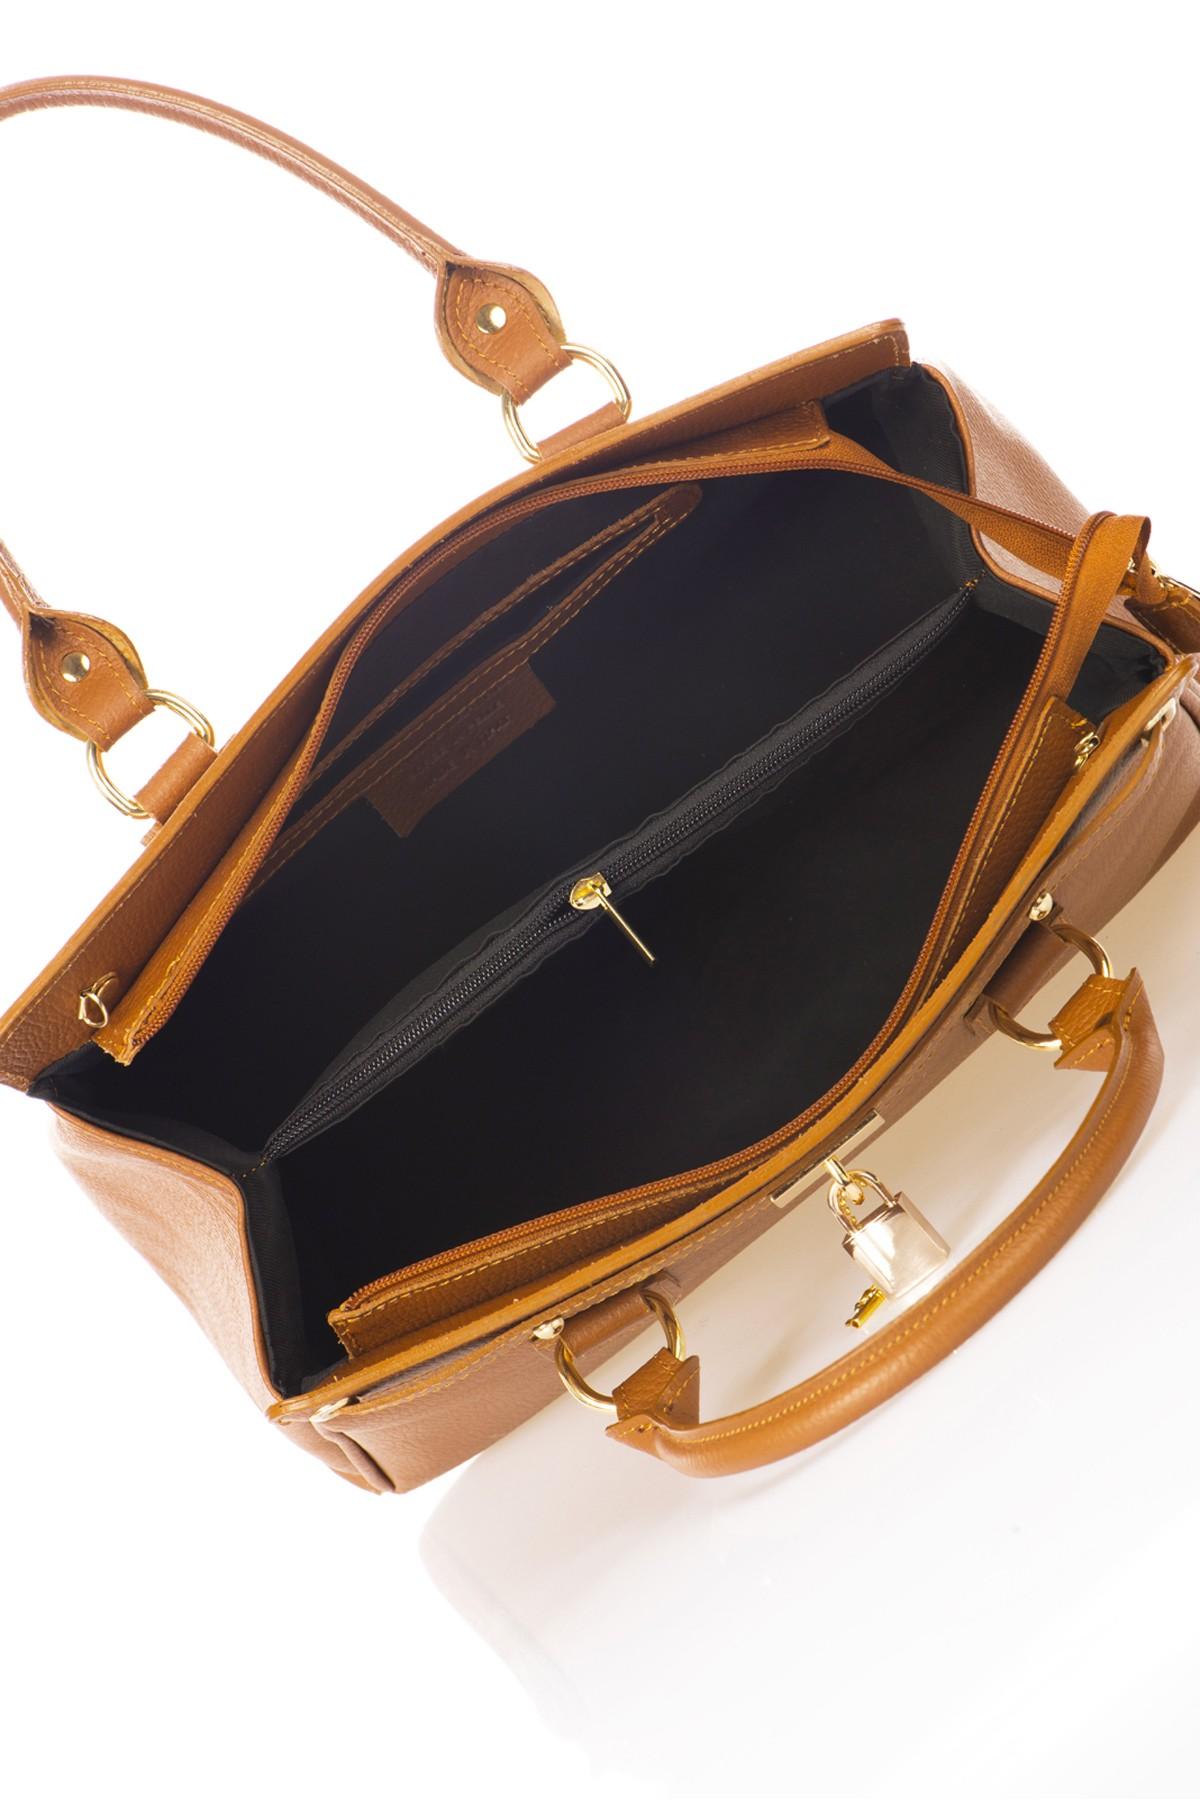 Giorgio Costa Leather Satchel Bag in Cognac (Brown) - Lyst